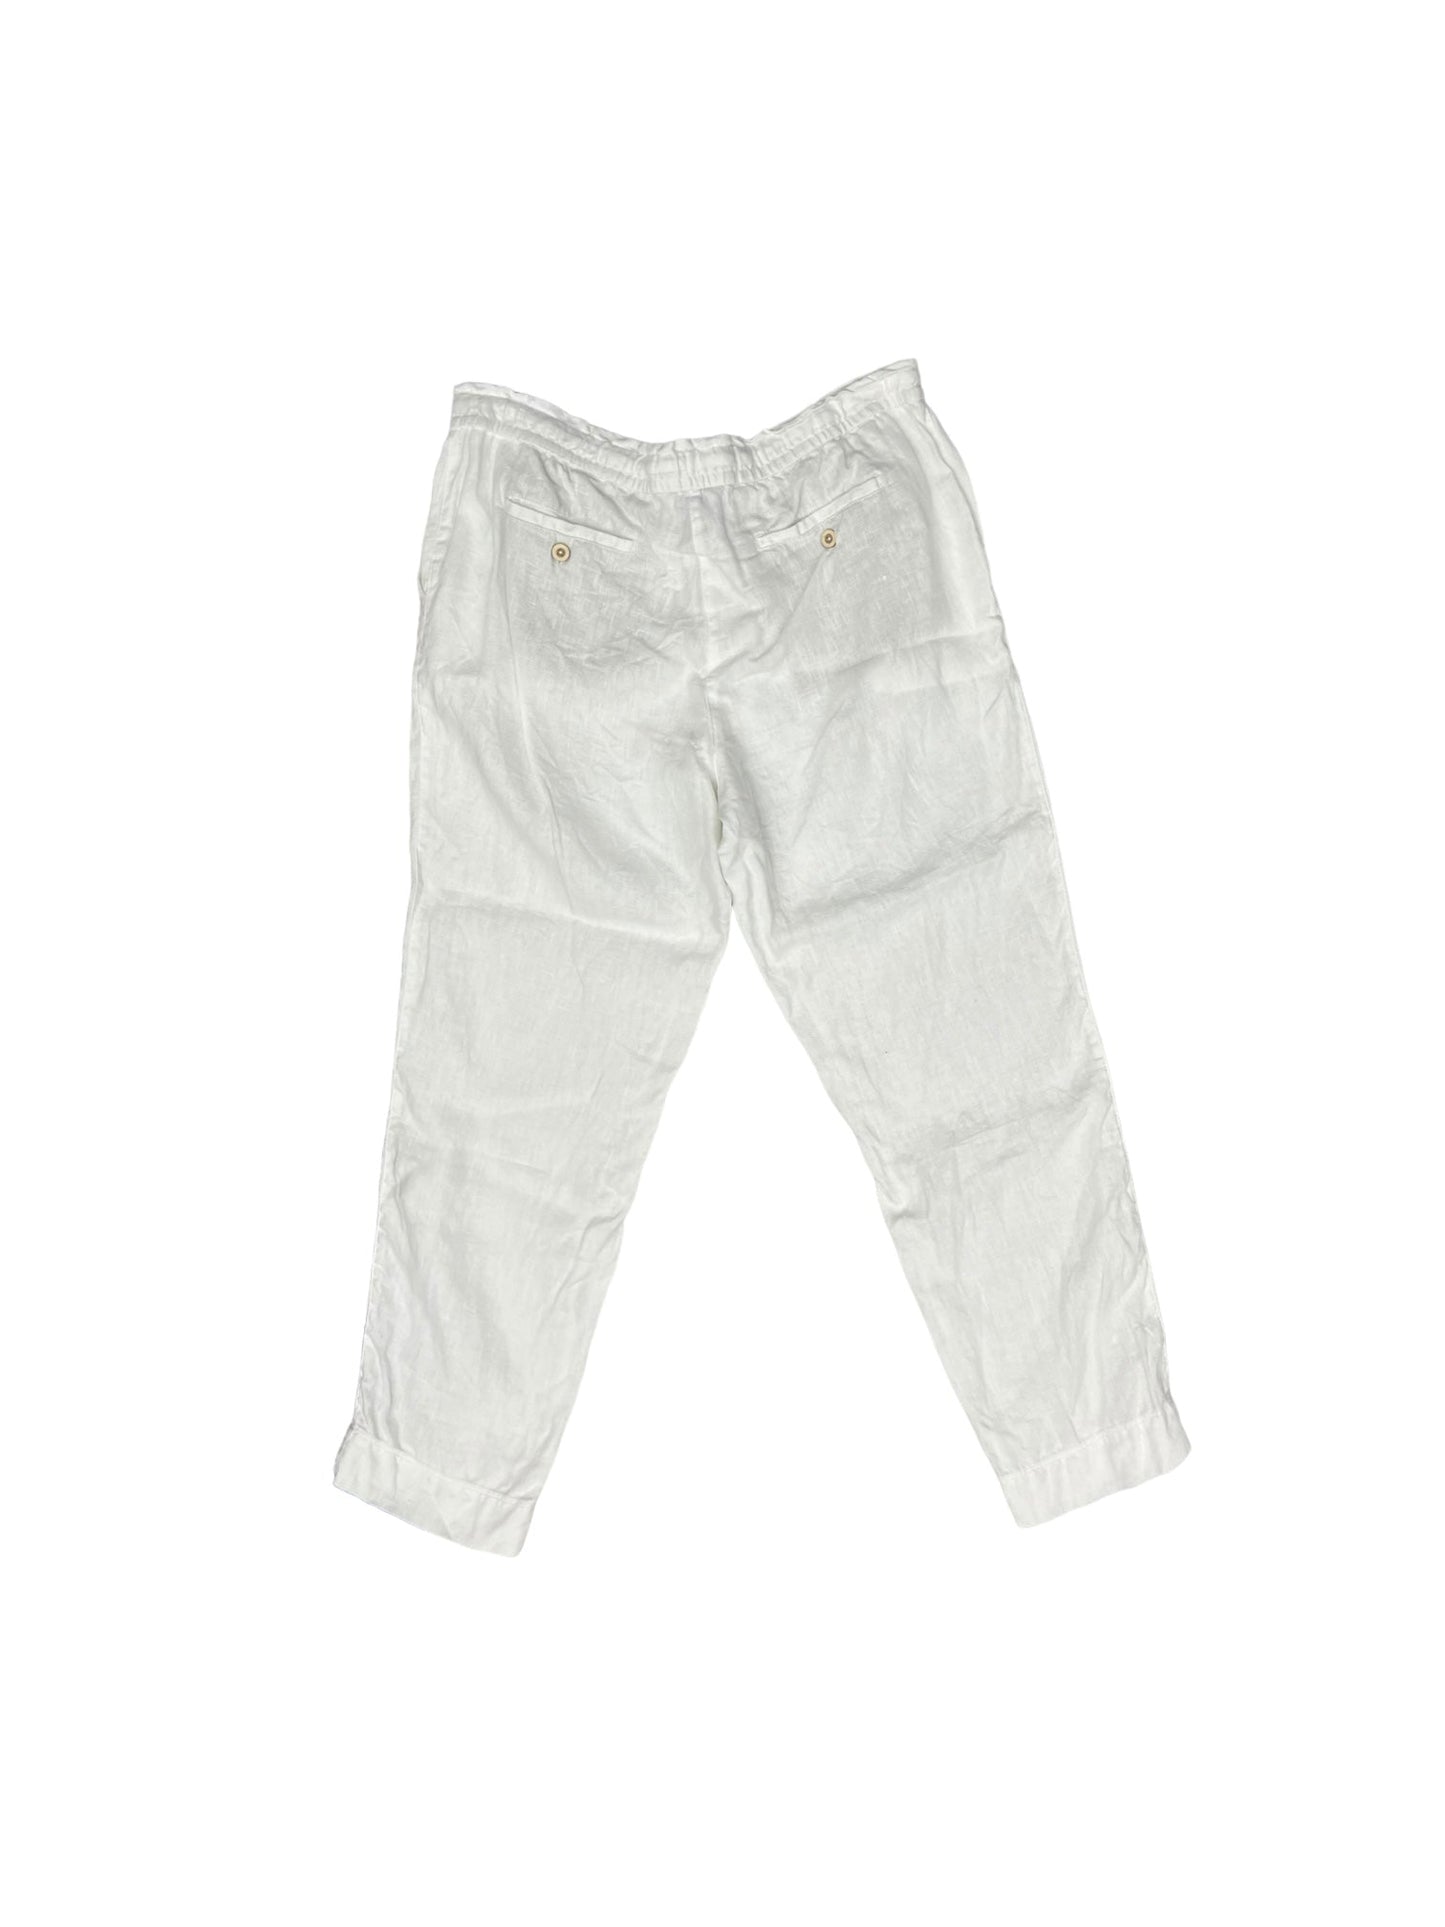 White Pants Linen Tommy Bahama, Size M